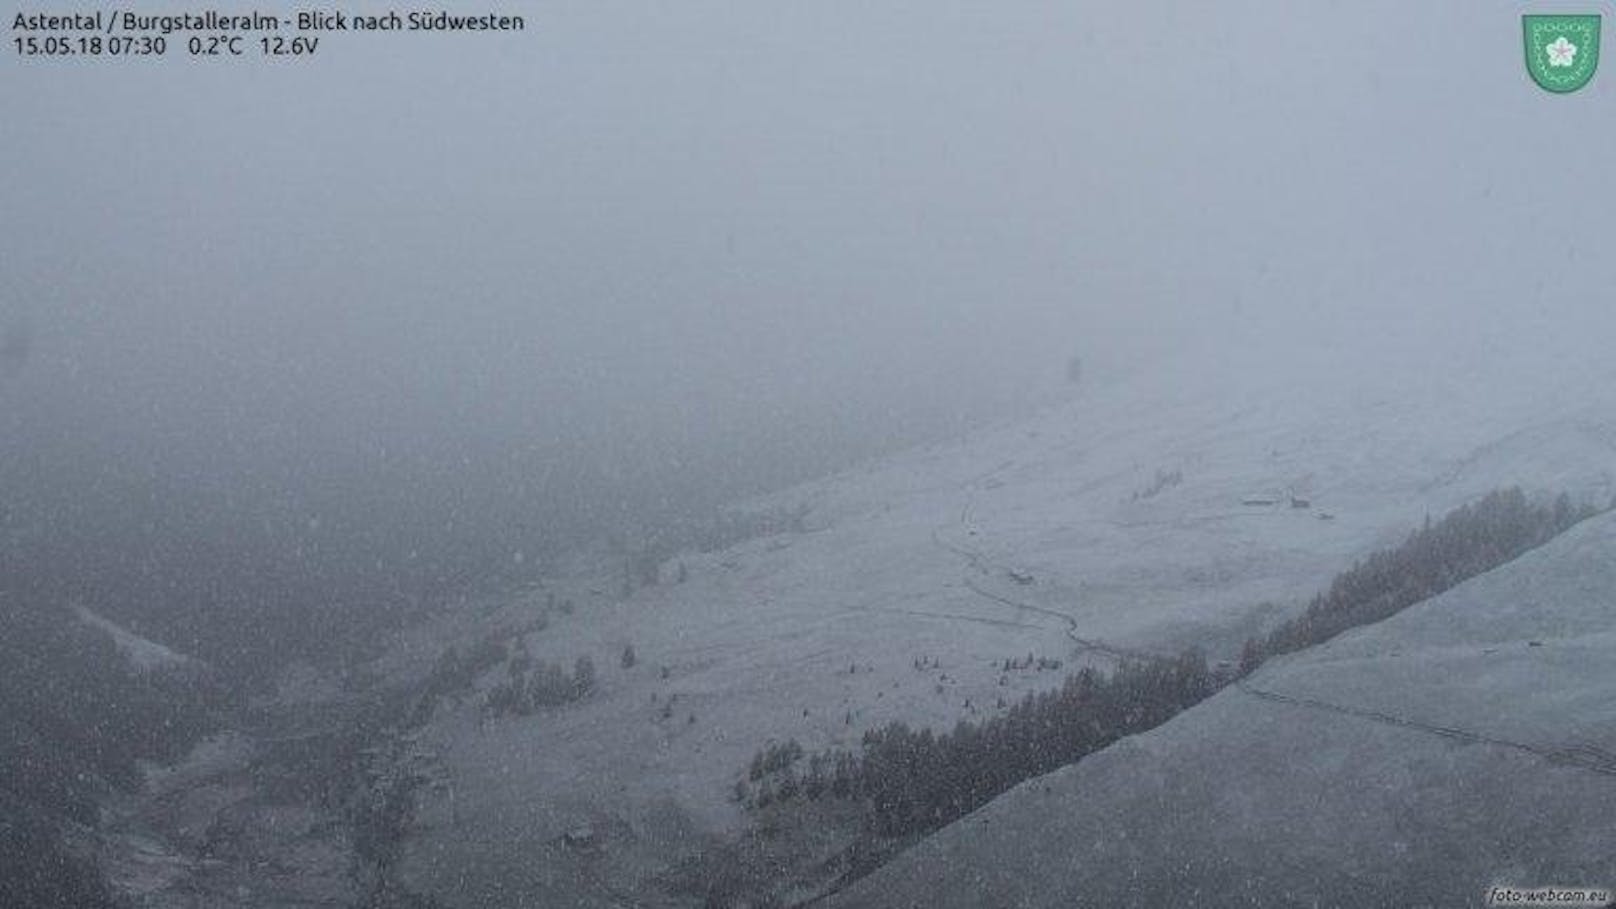 Schneefall in Kärnten am Dienstag in etwa 2.100 m Höhe. (Quelle: www.foto-webcam.eu)